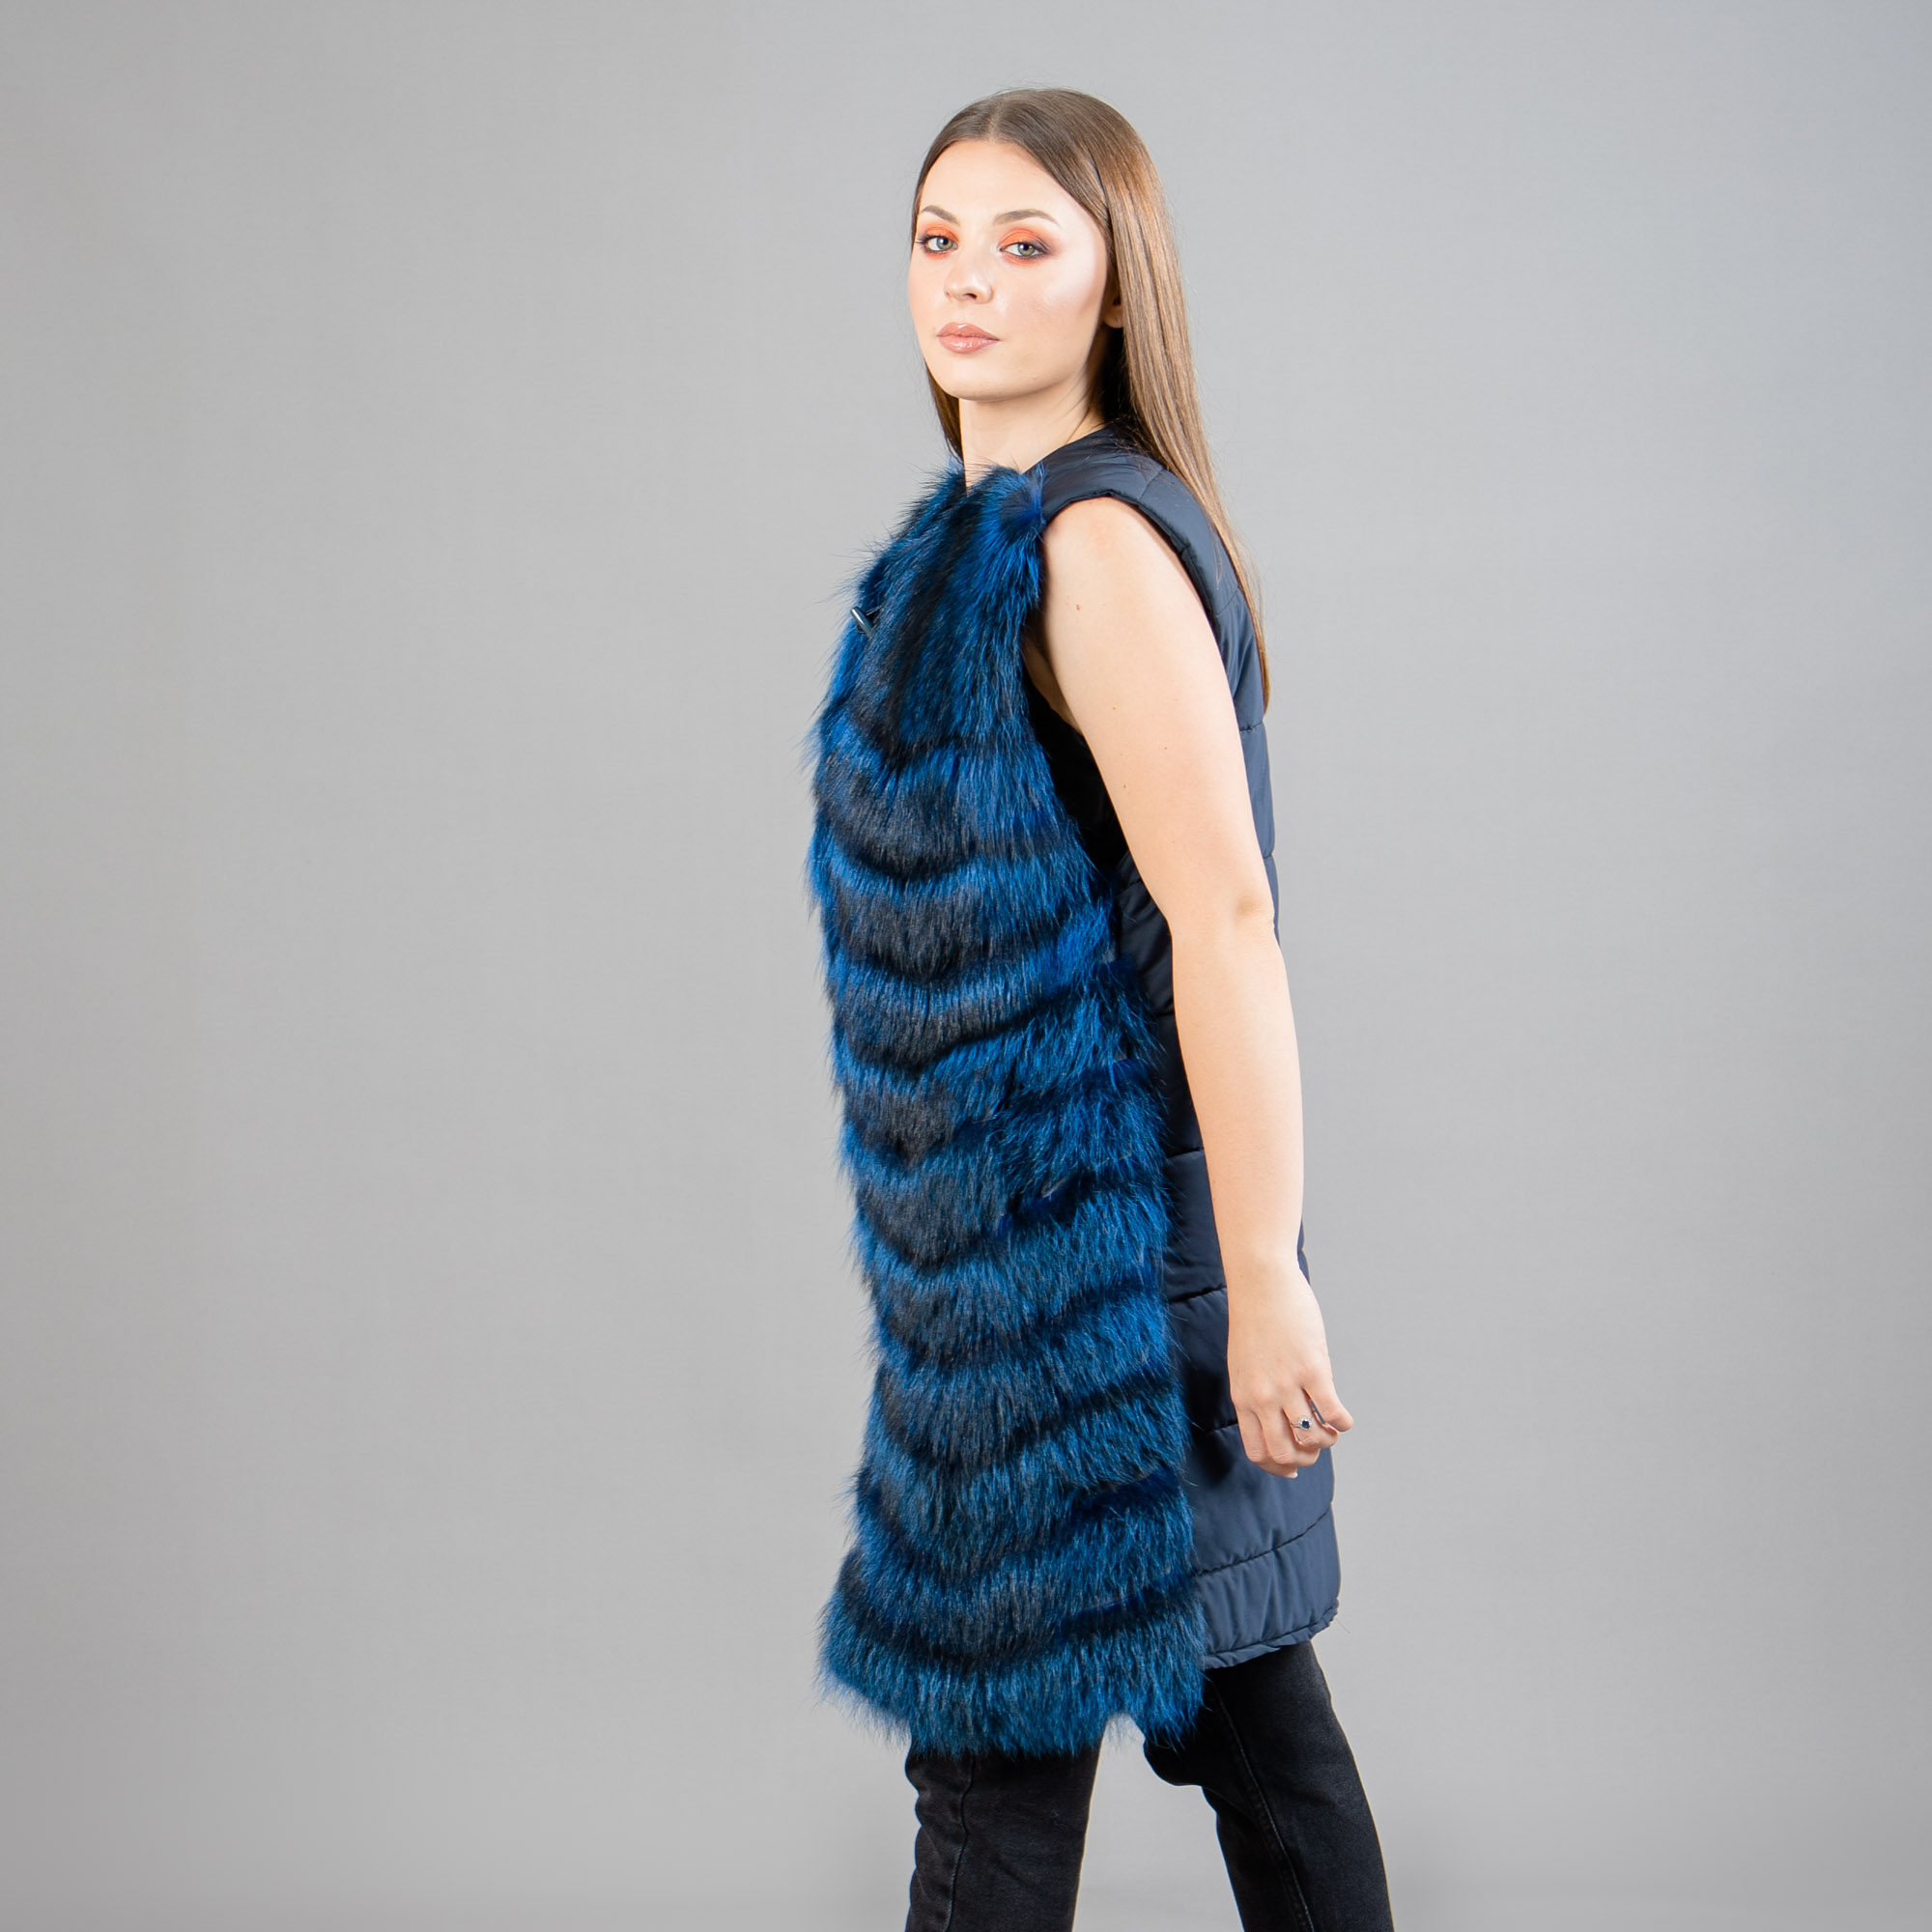 Raccoon fur vest in blue color